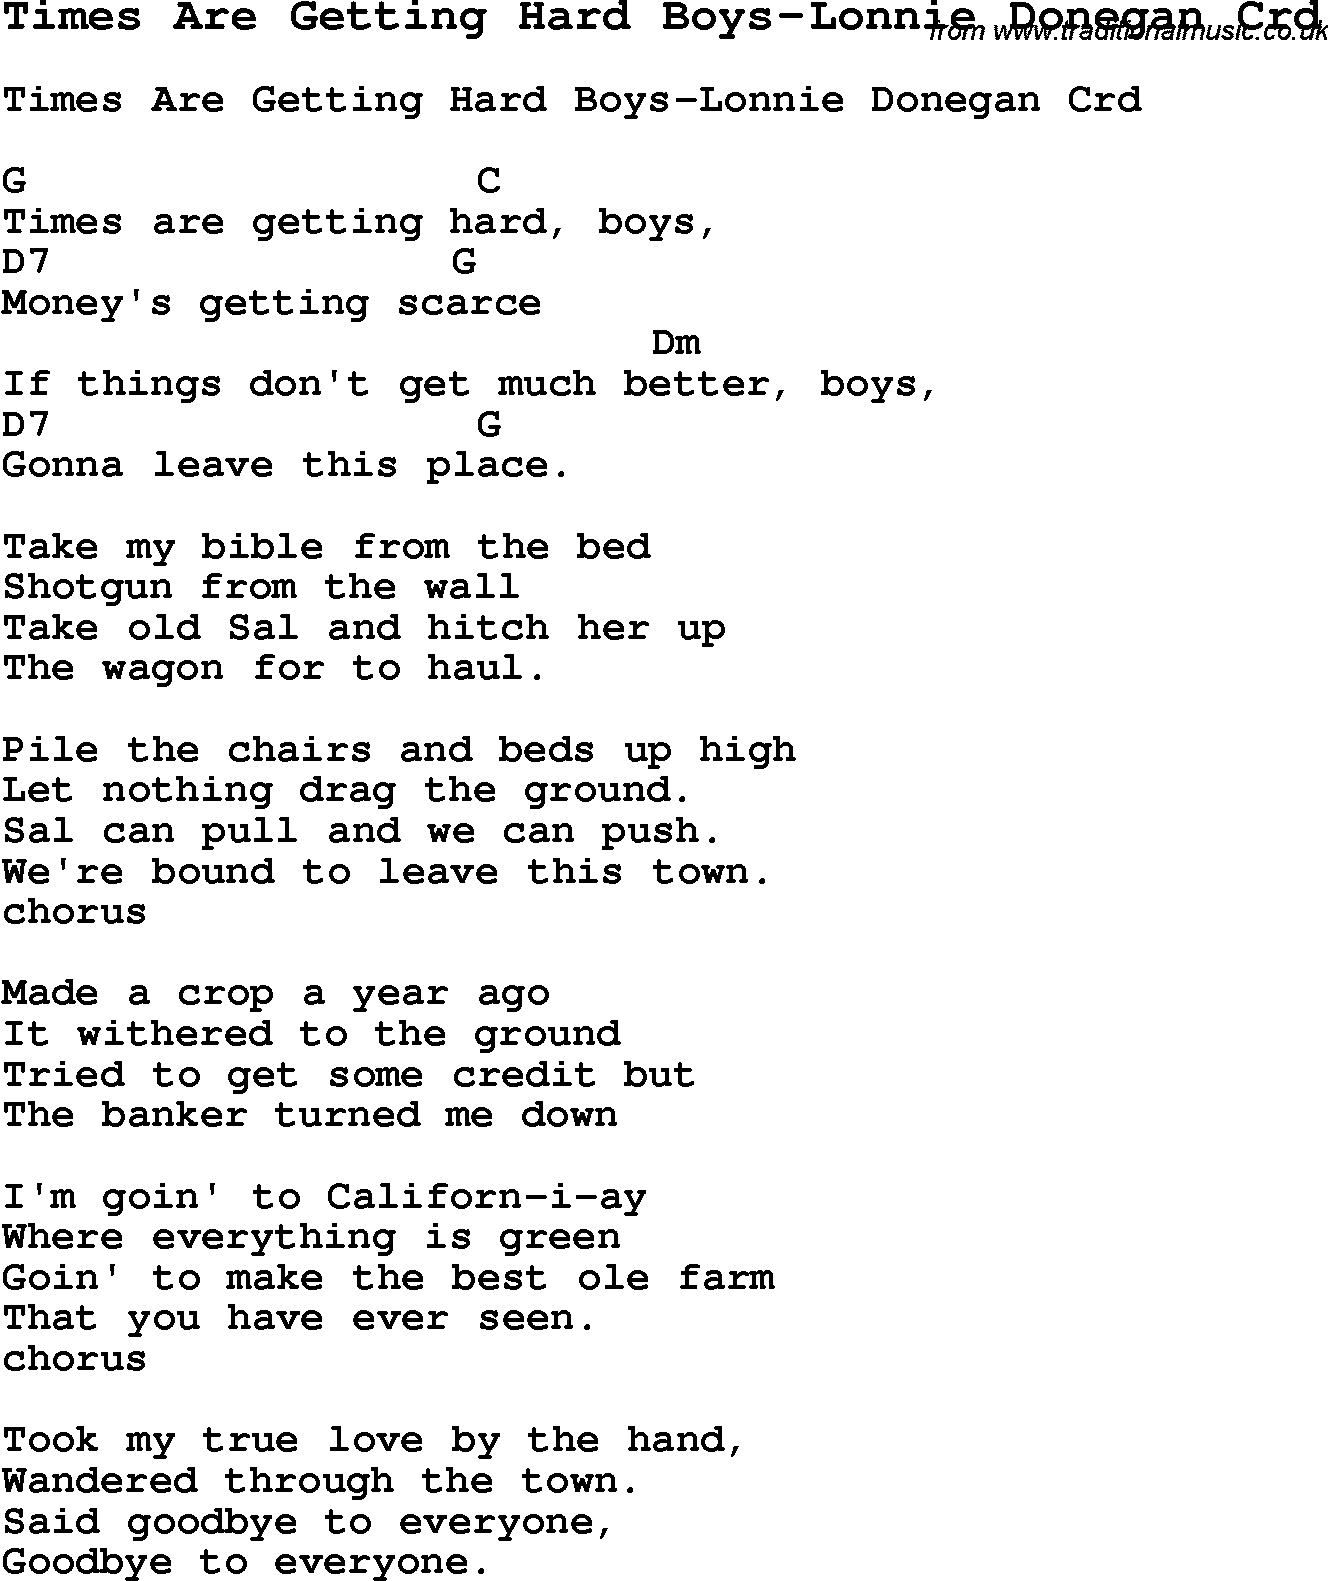 Skiffle Song Lyrics for Times Are Getting Hard Boys-Lonnie Donegan with chords for Mandolin, Ukulele, Guitar, Banjo etc.